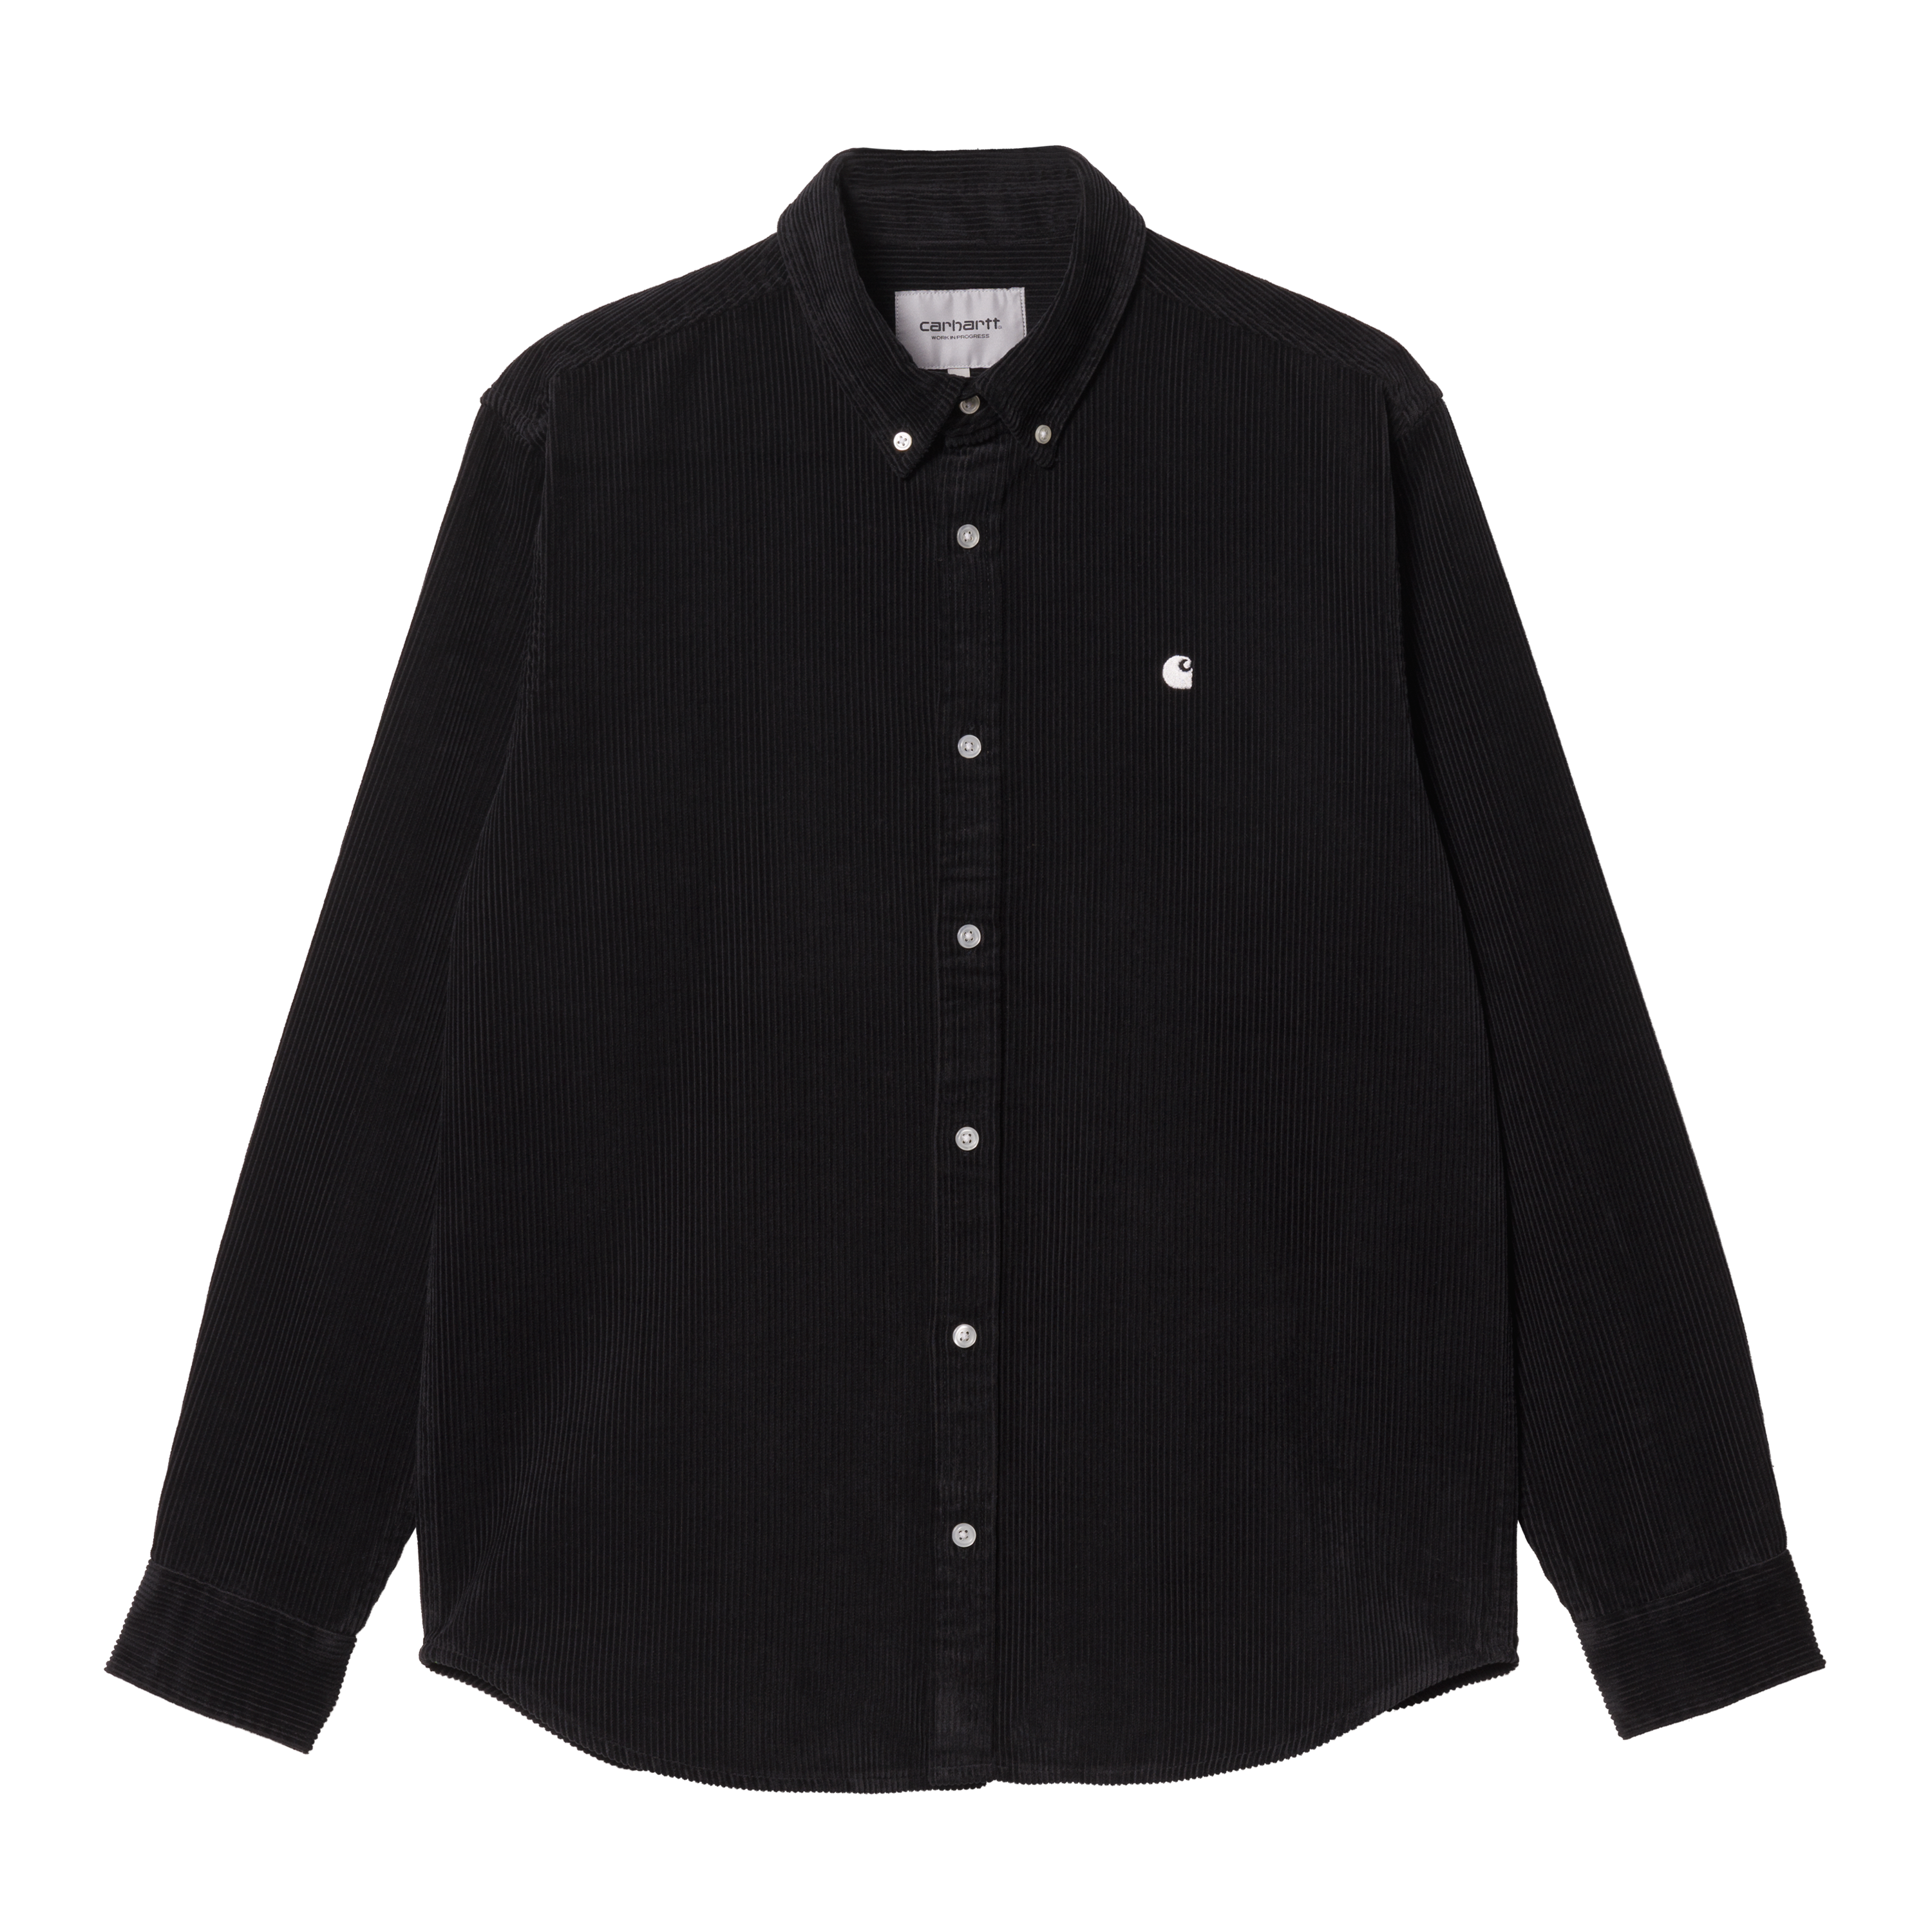 Carhartt WIP Long Sleeve Madison Cord Shirt in Black